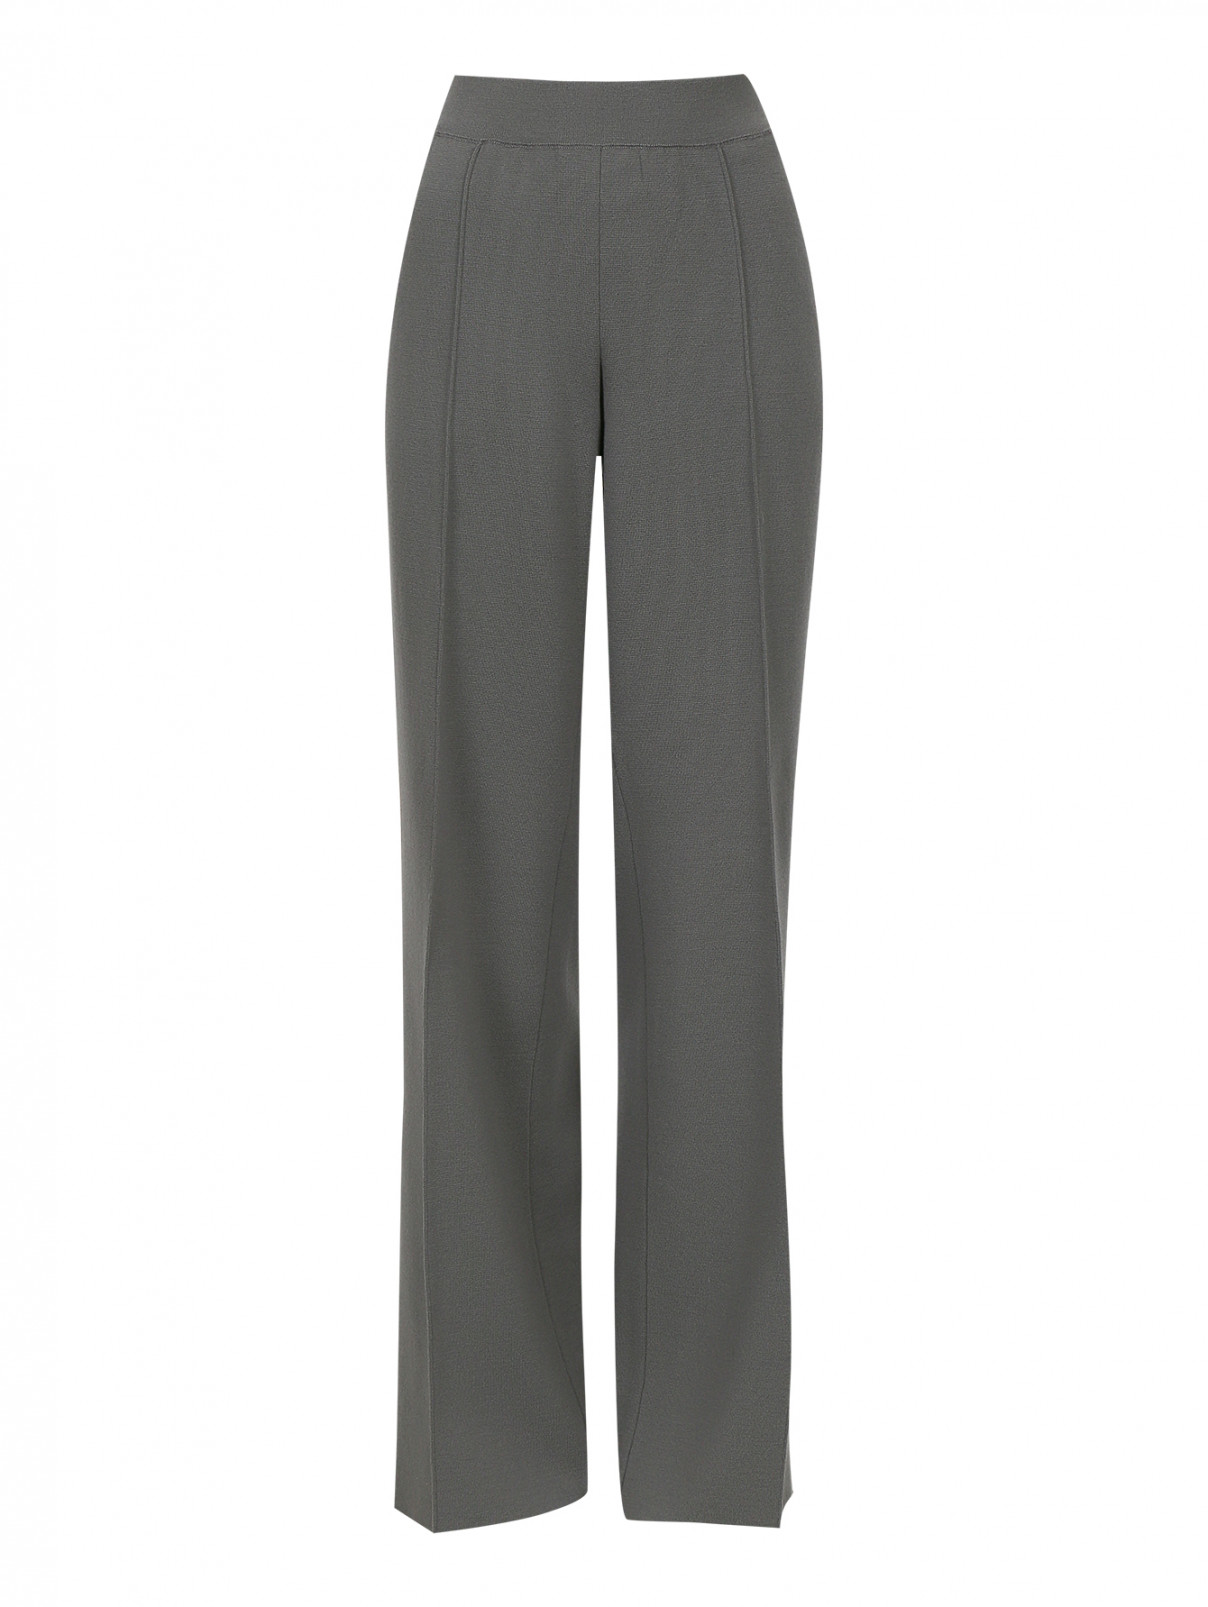 Трикотажные брюки Alberta Ferretti  –  Общий вид  – Цвет:  Серый